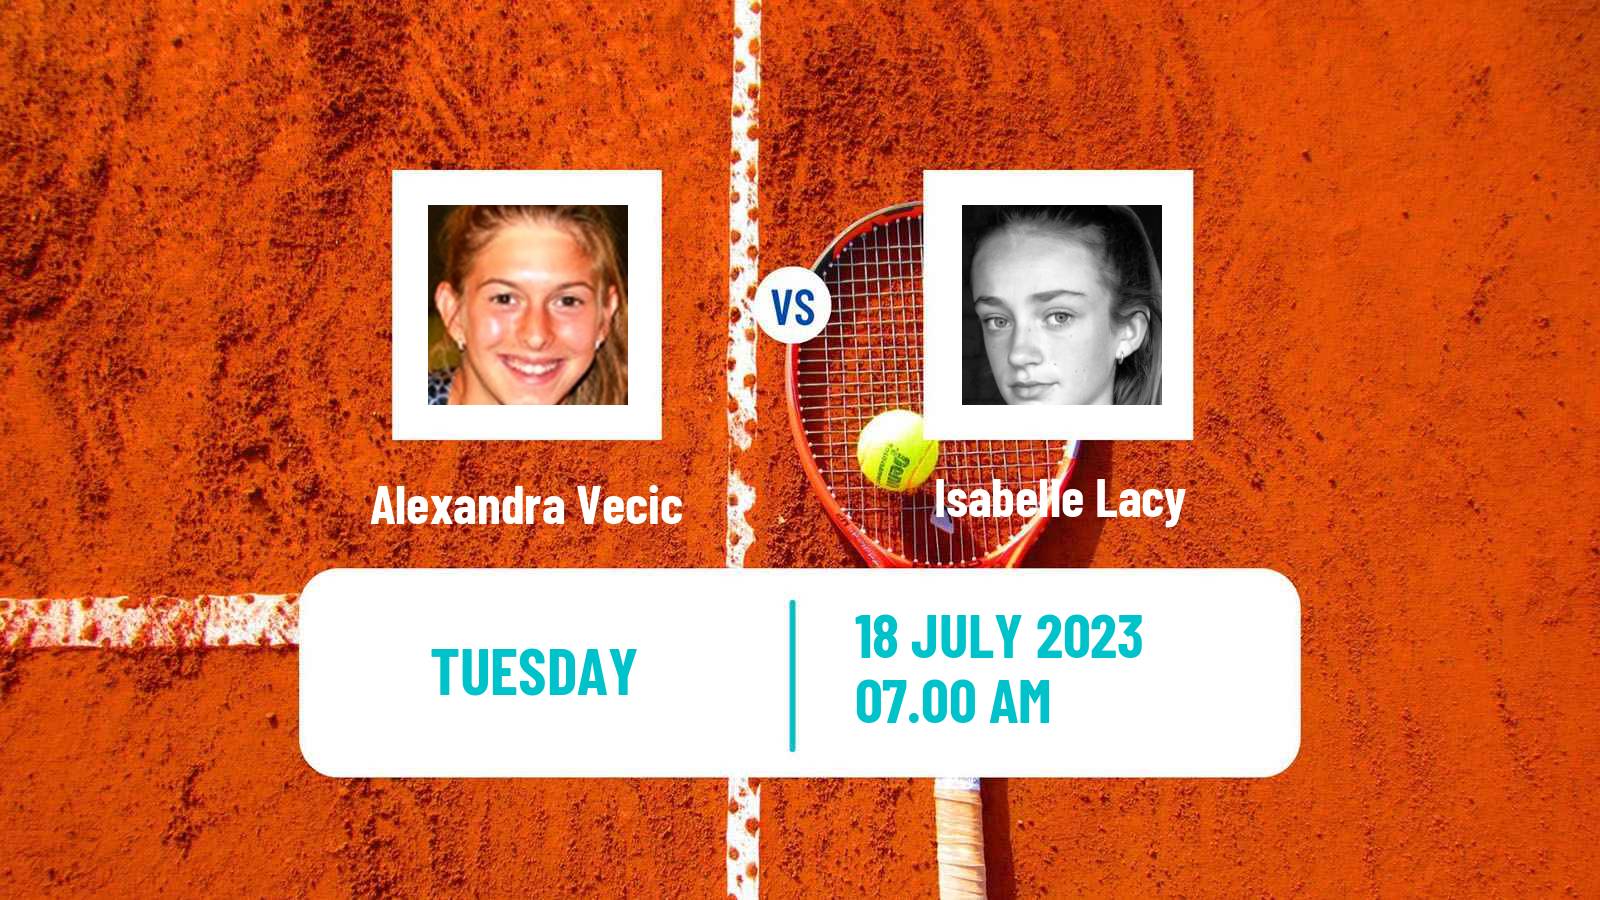 Tennis ITF W25 Roehampton Women Alexandra Vecic - Isabelle Lacy